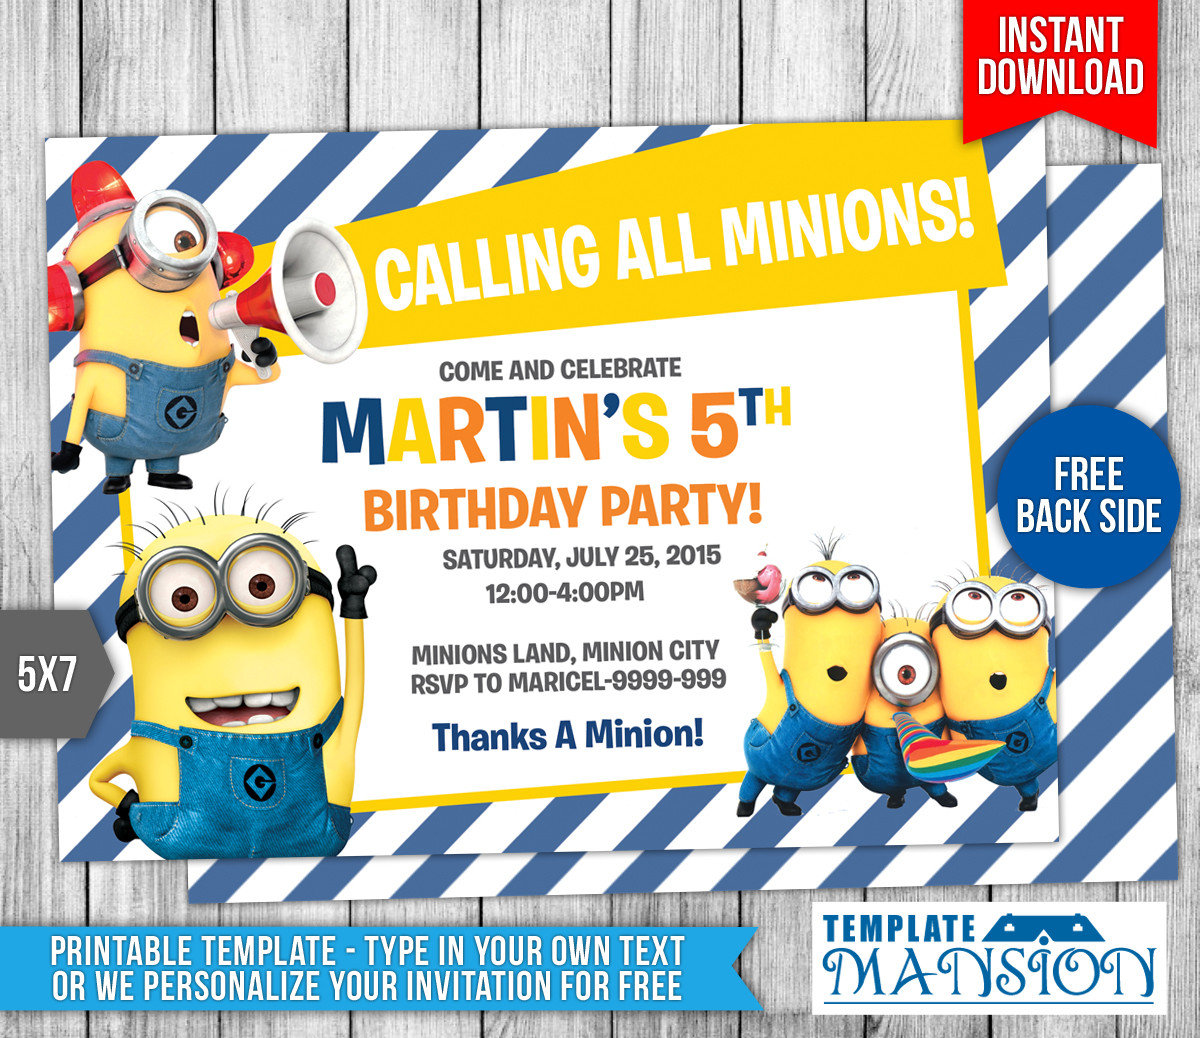 Minions Birthday Invitations
 Minions Birthday Invitation 7 by templatemansion on